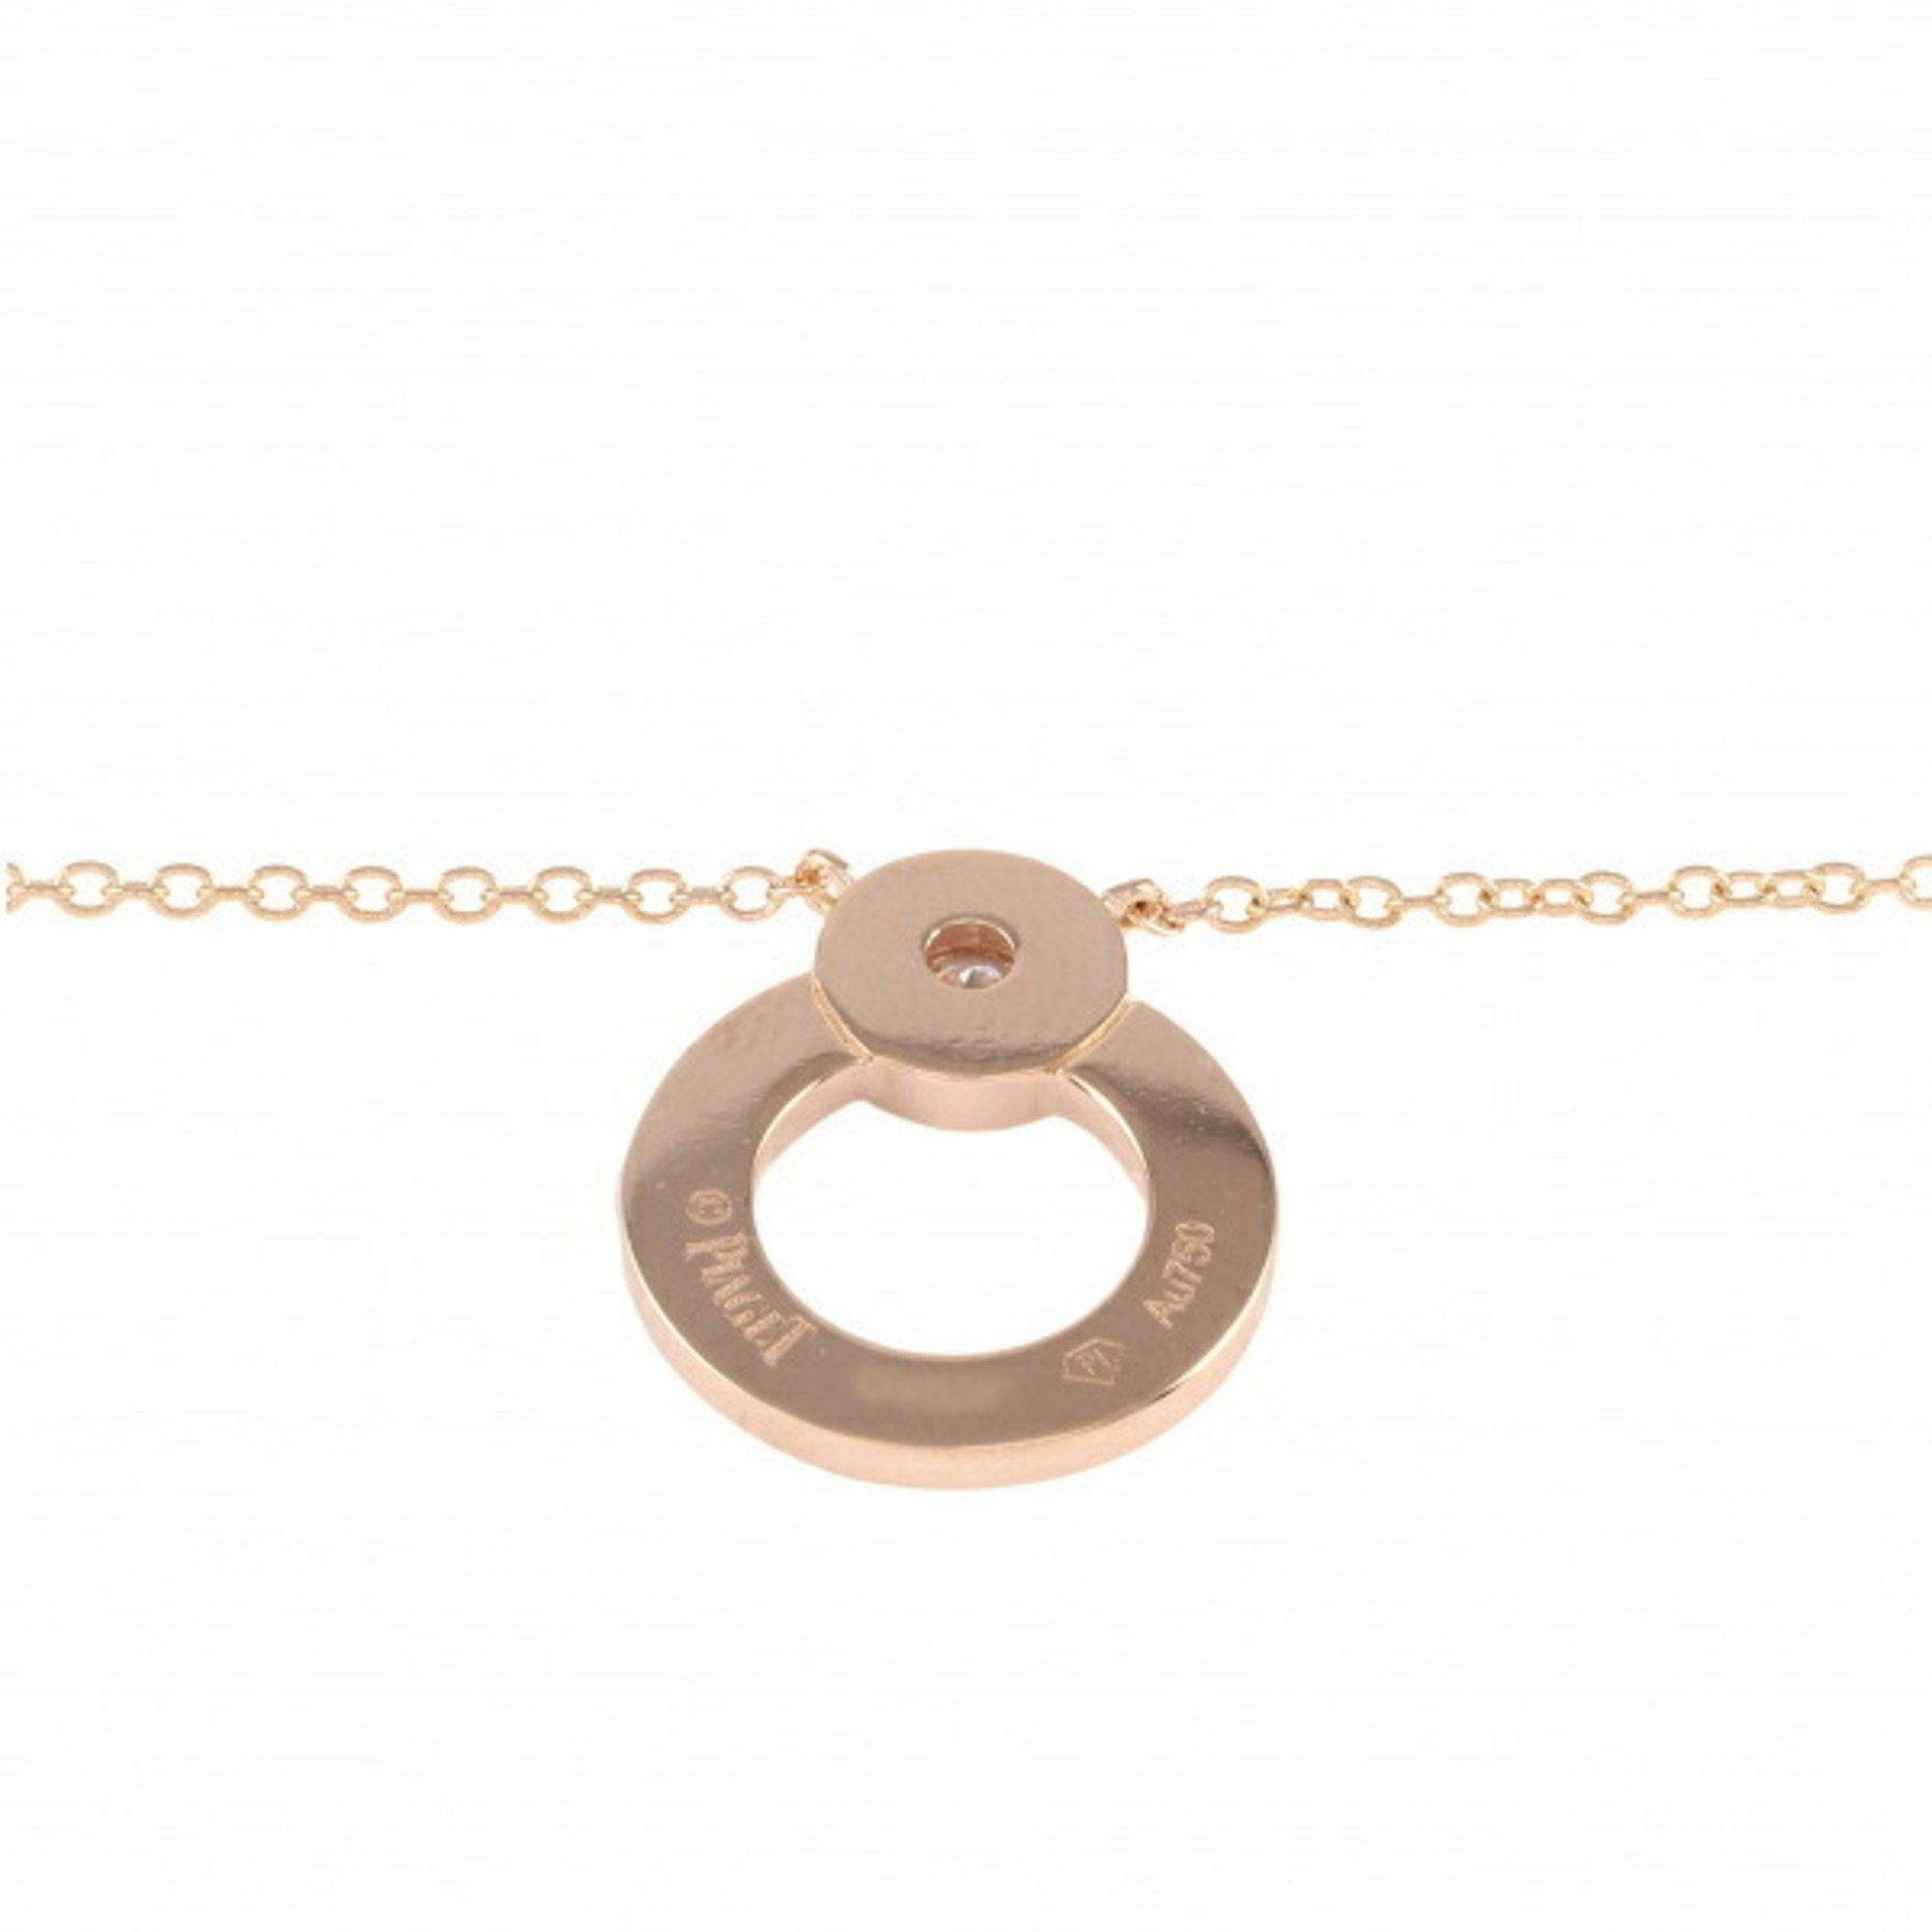 Piaget Possession necklace/pendant K18PG pink gold